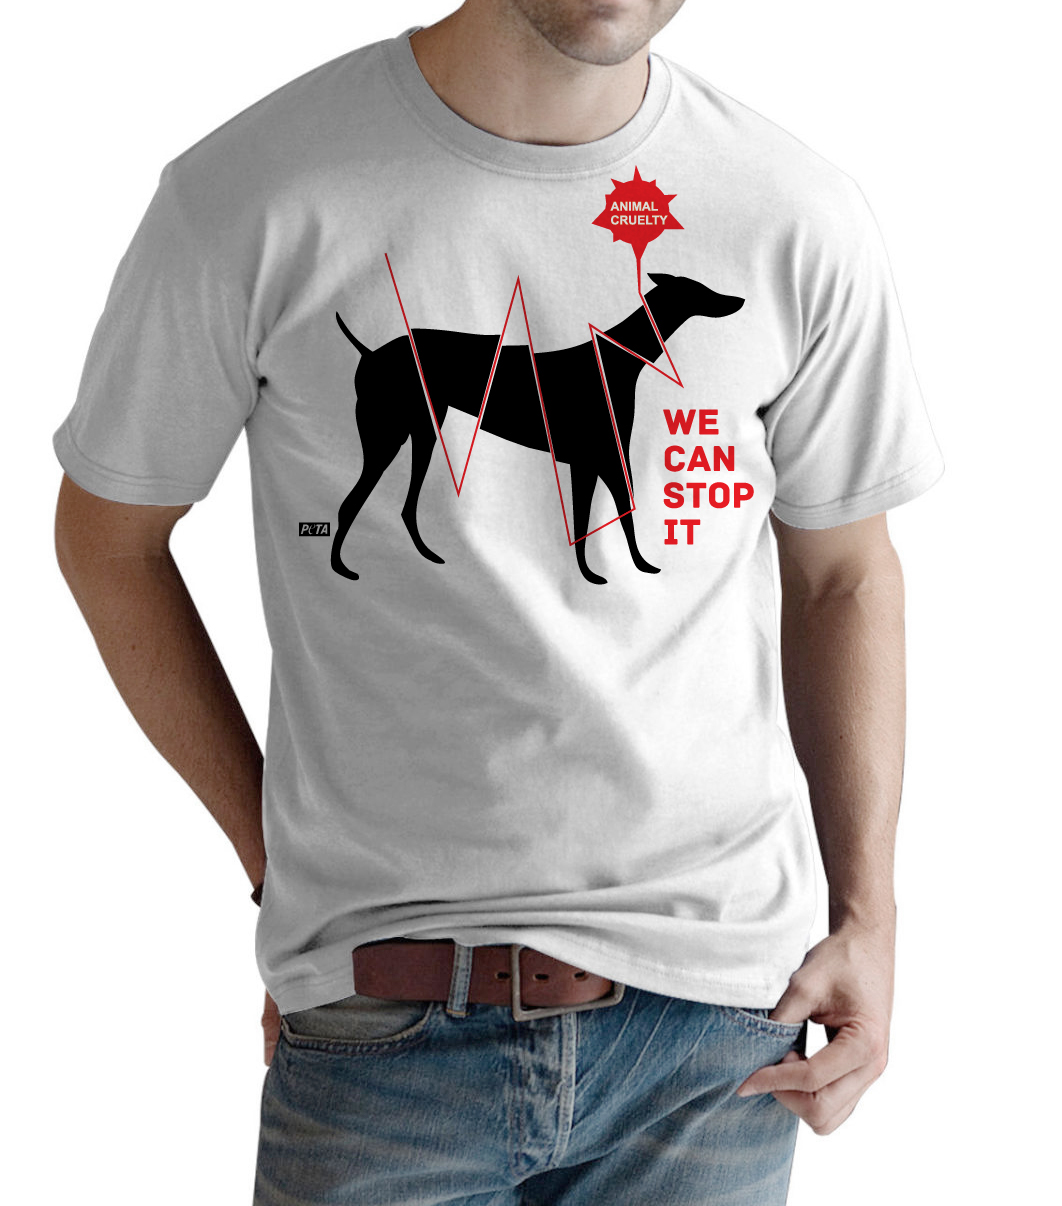 t-shirt Rafael Ginatulin almaty free T-Shirt Design Design for T-Shirt